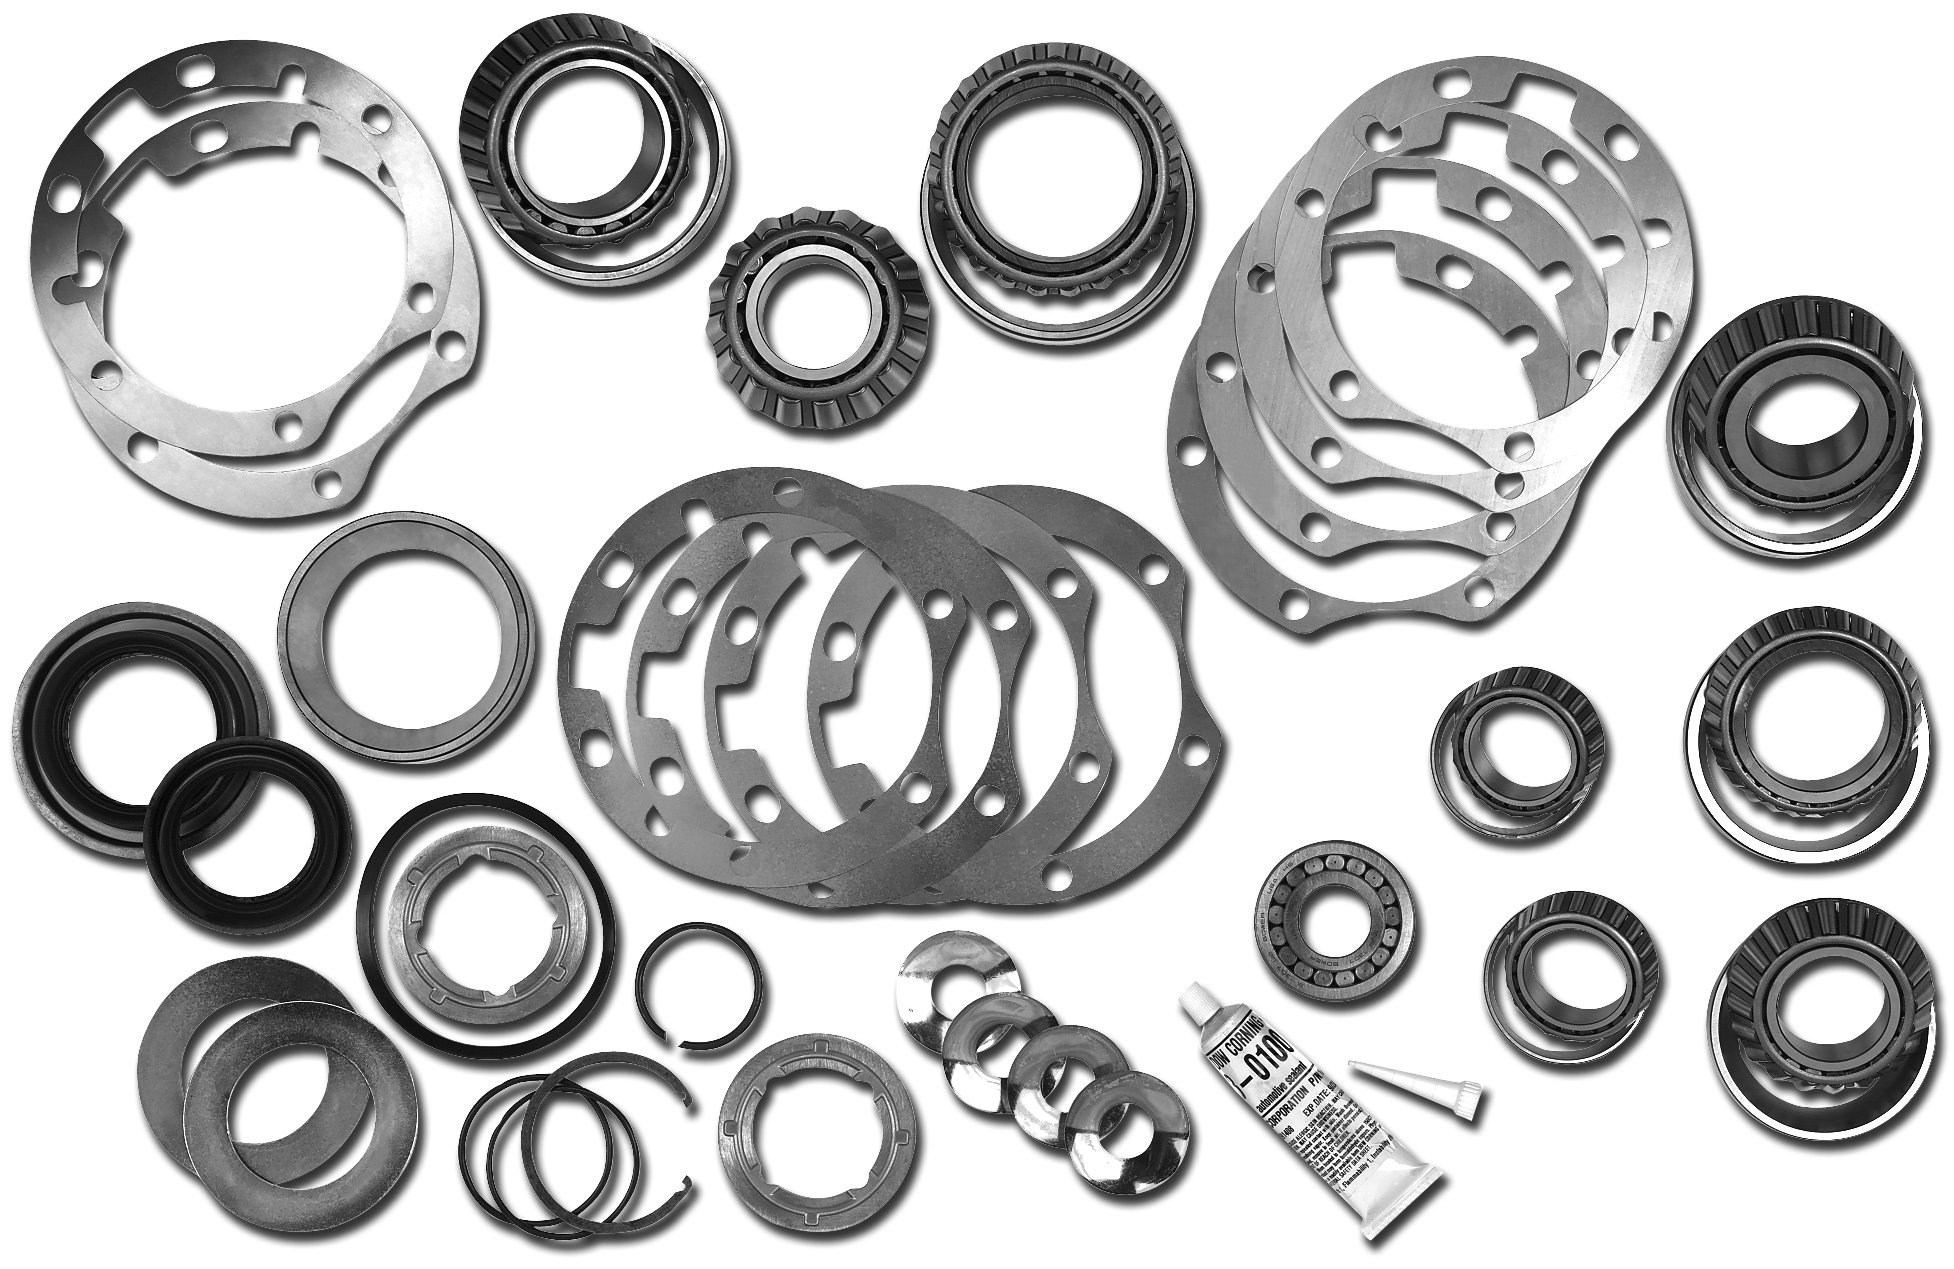 Spicer 2017371 Axle Bearing Repair Kit